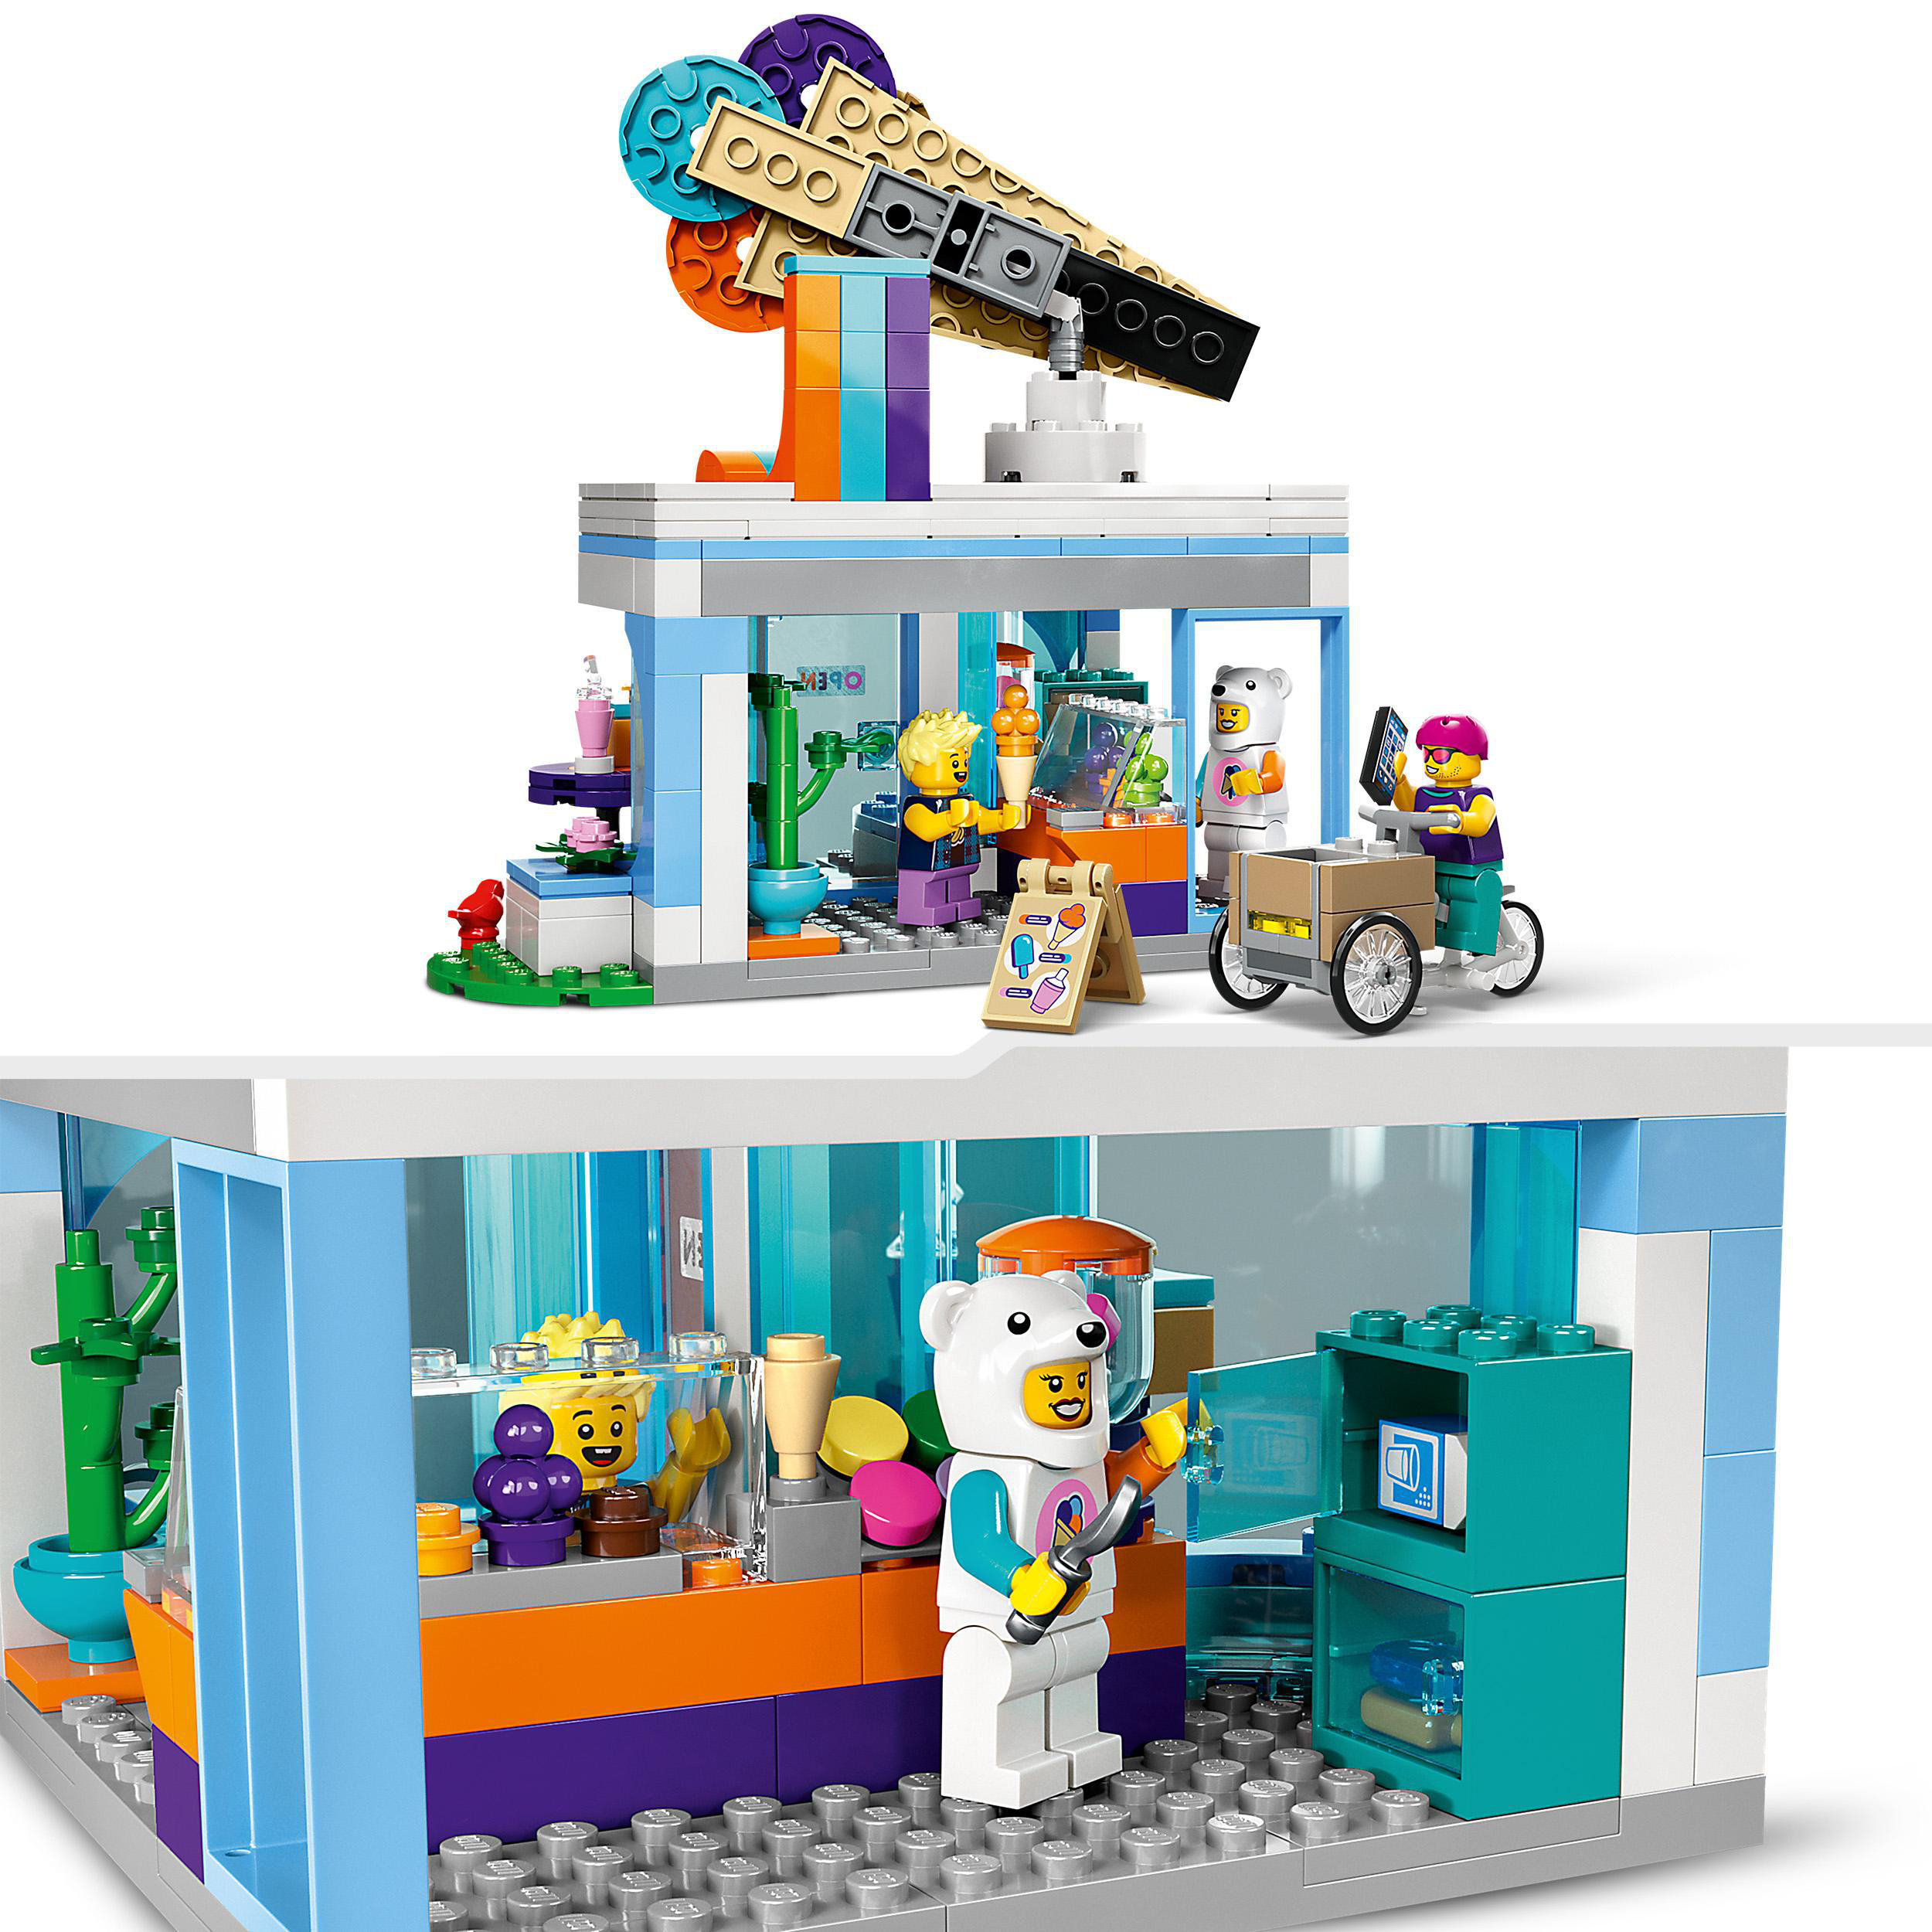 Eisdiele Mehrfarbig 60363 City LEGO Bausatz,